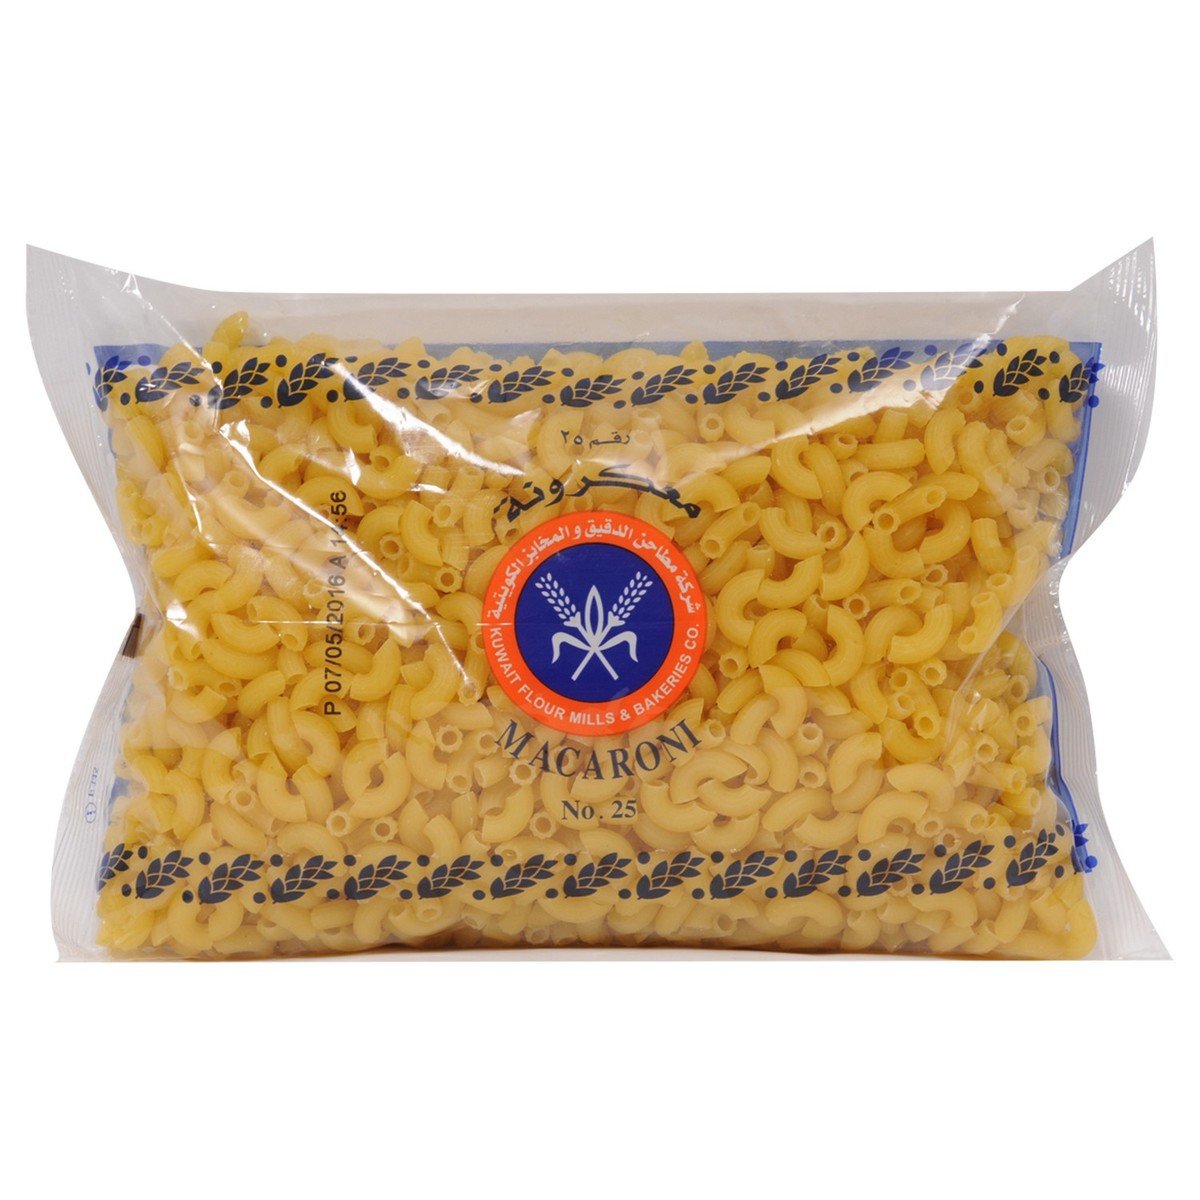 KFMBC Macaroni No.25 500 g